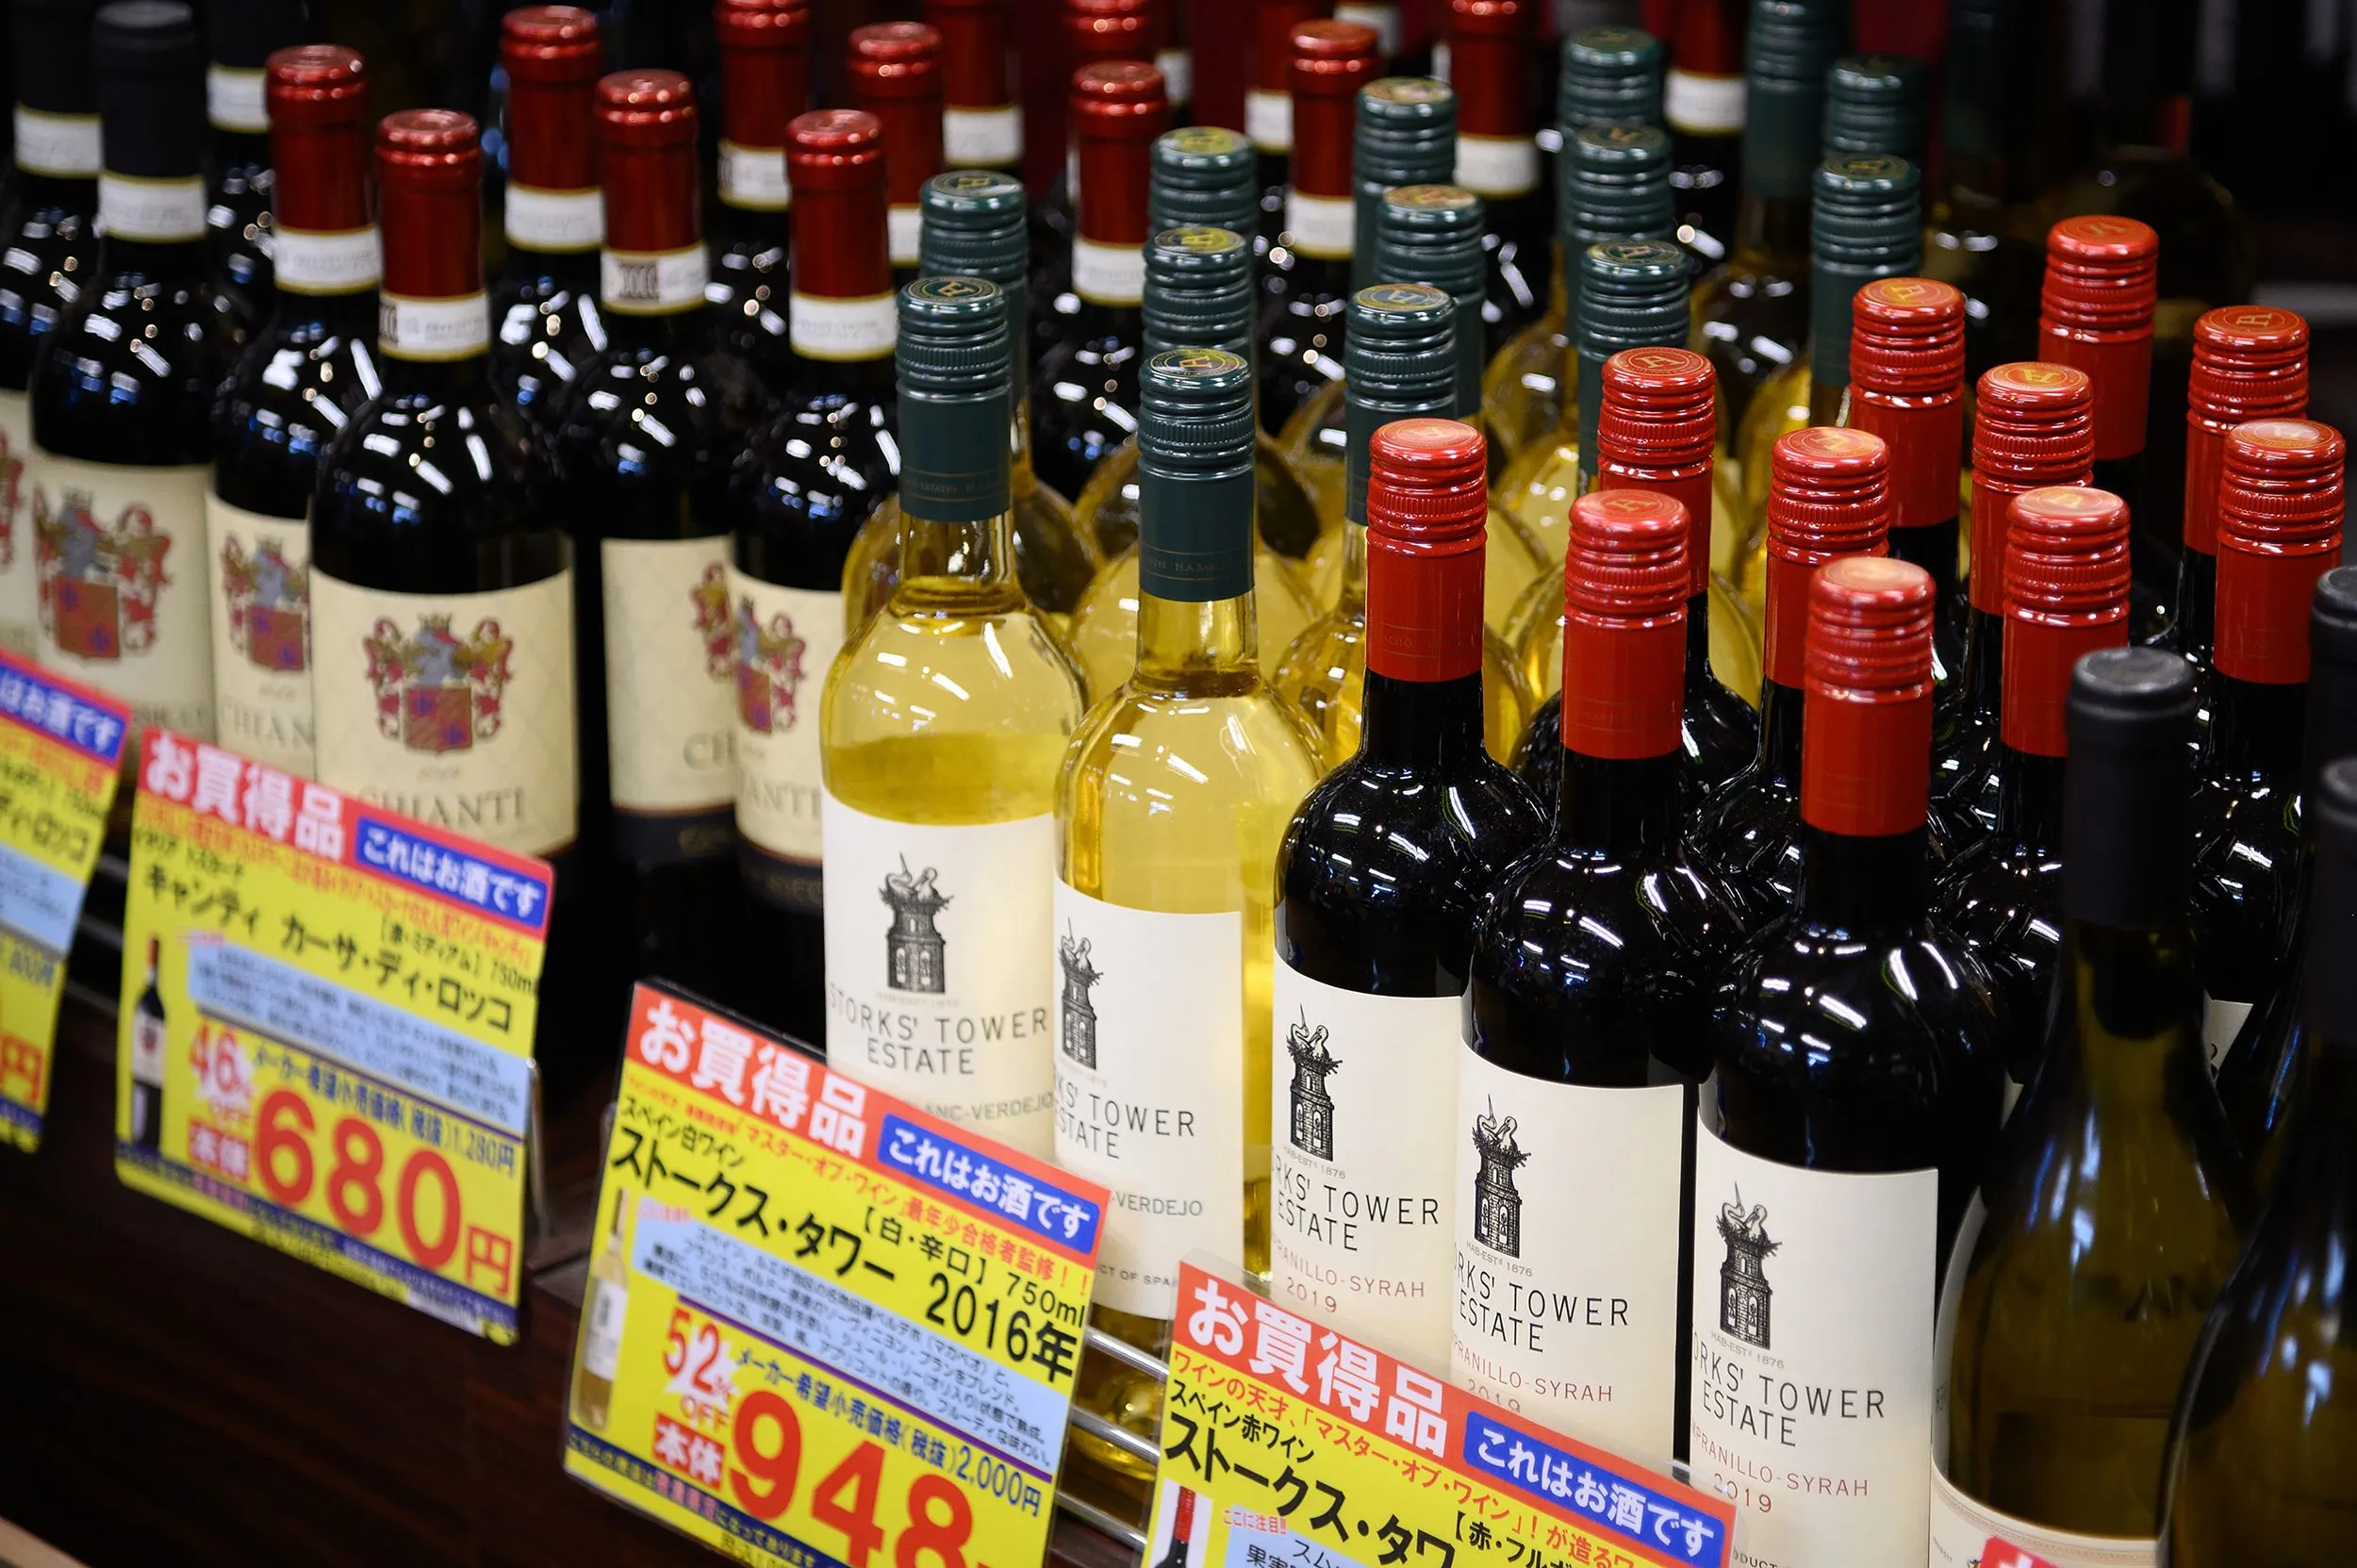 Bottle Off in Japan, east_asia | Wine,Beer,Spirits,Beverages - Country Helper